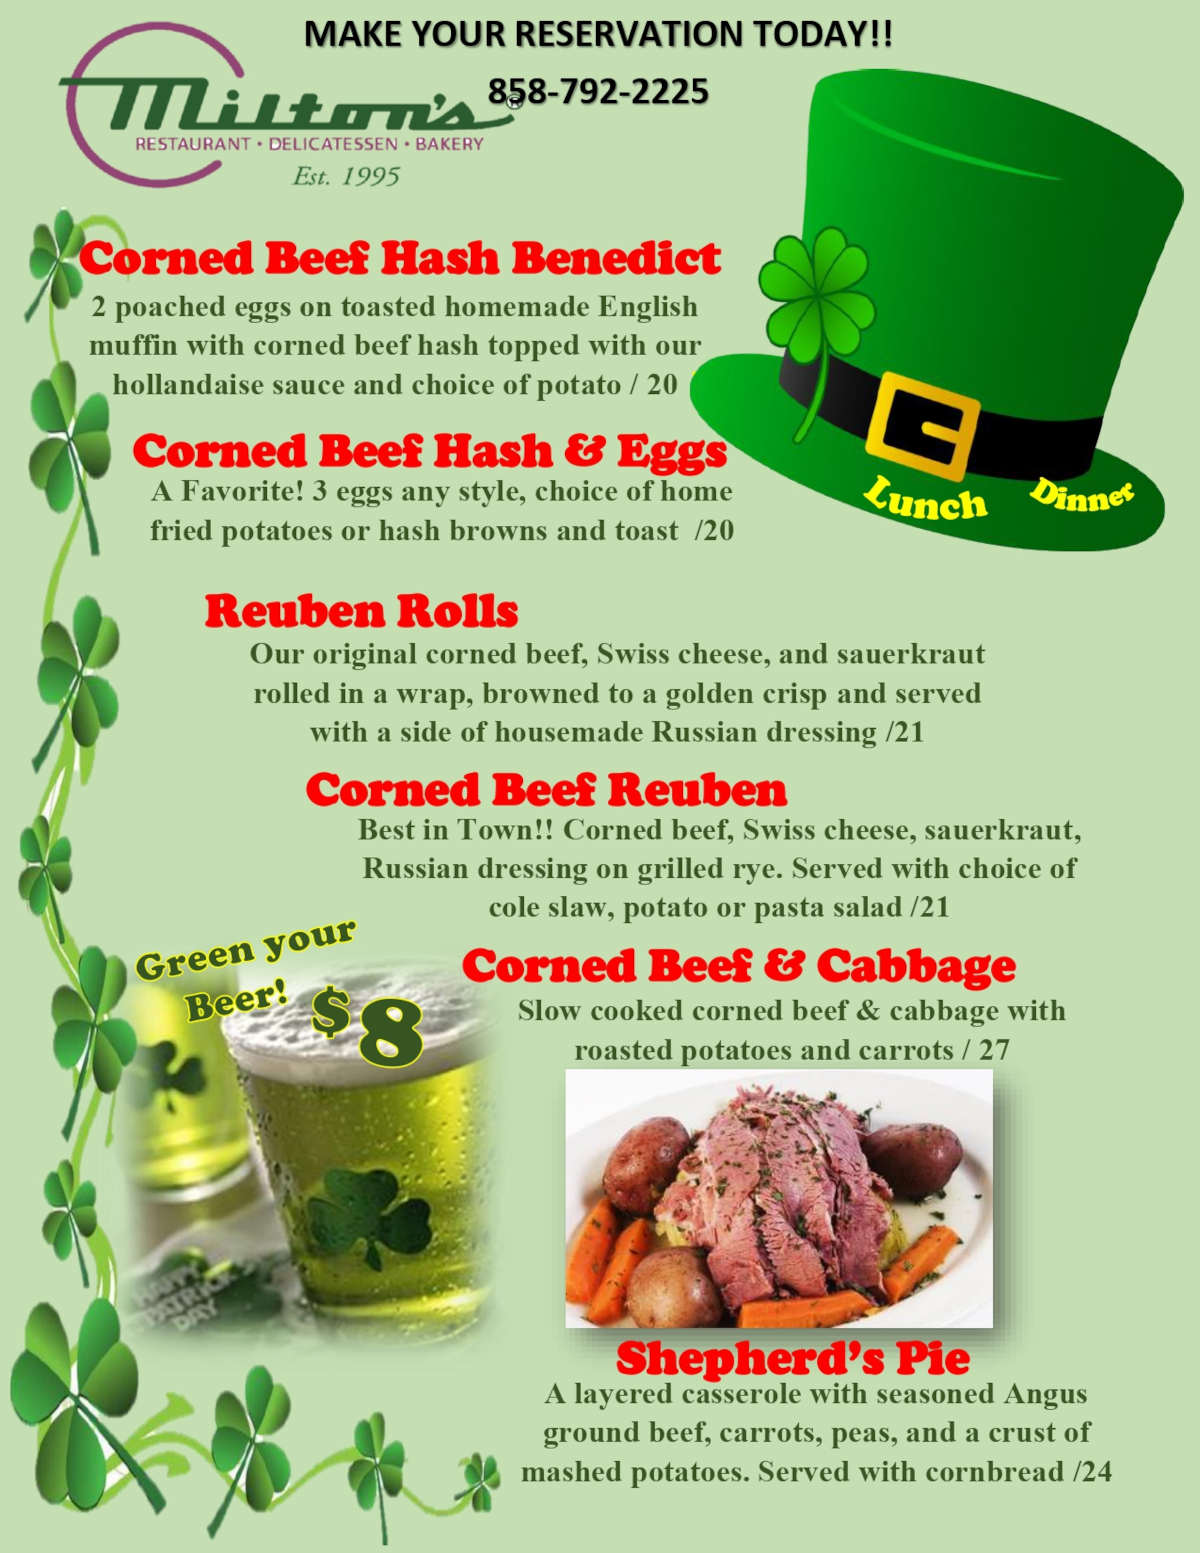 The St. Patricks day flyer